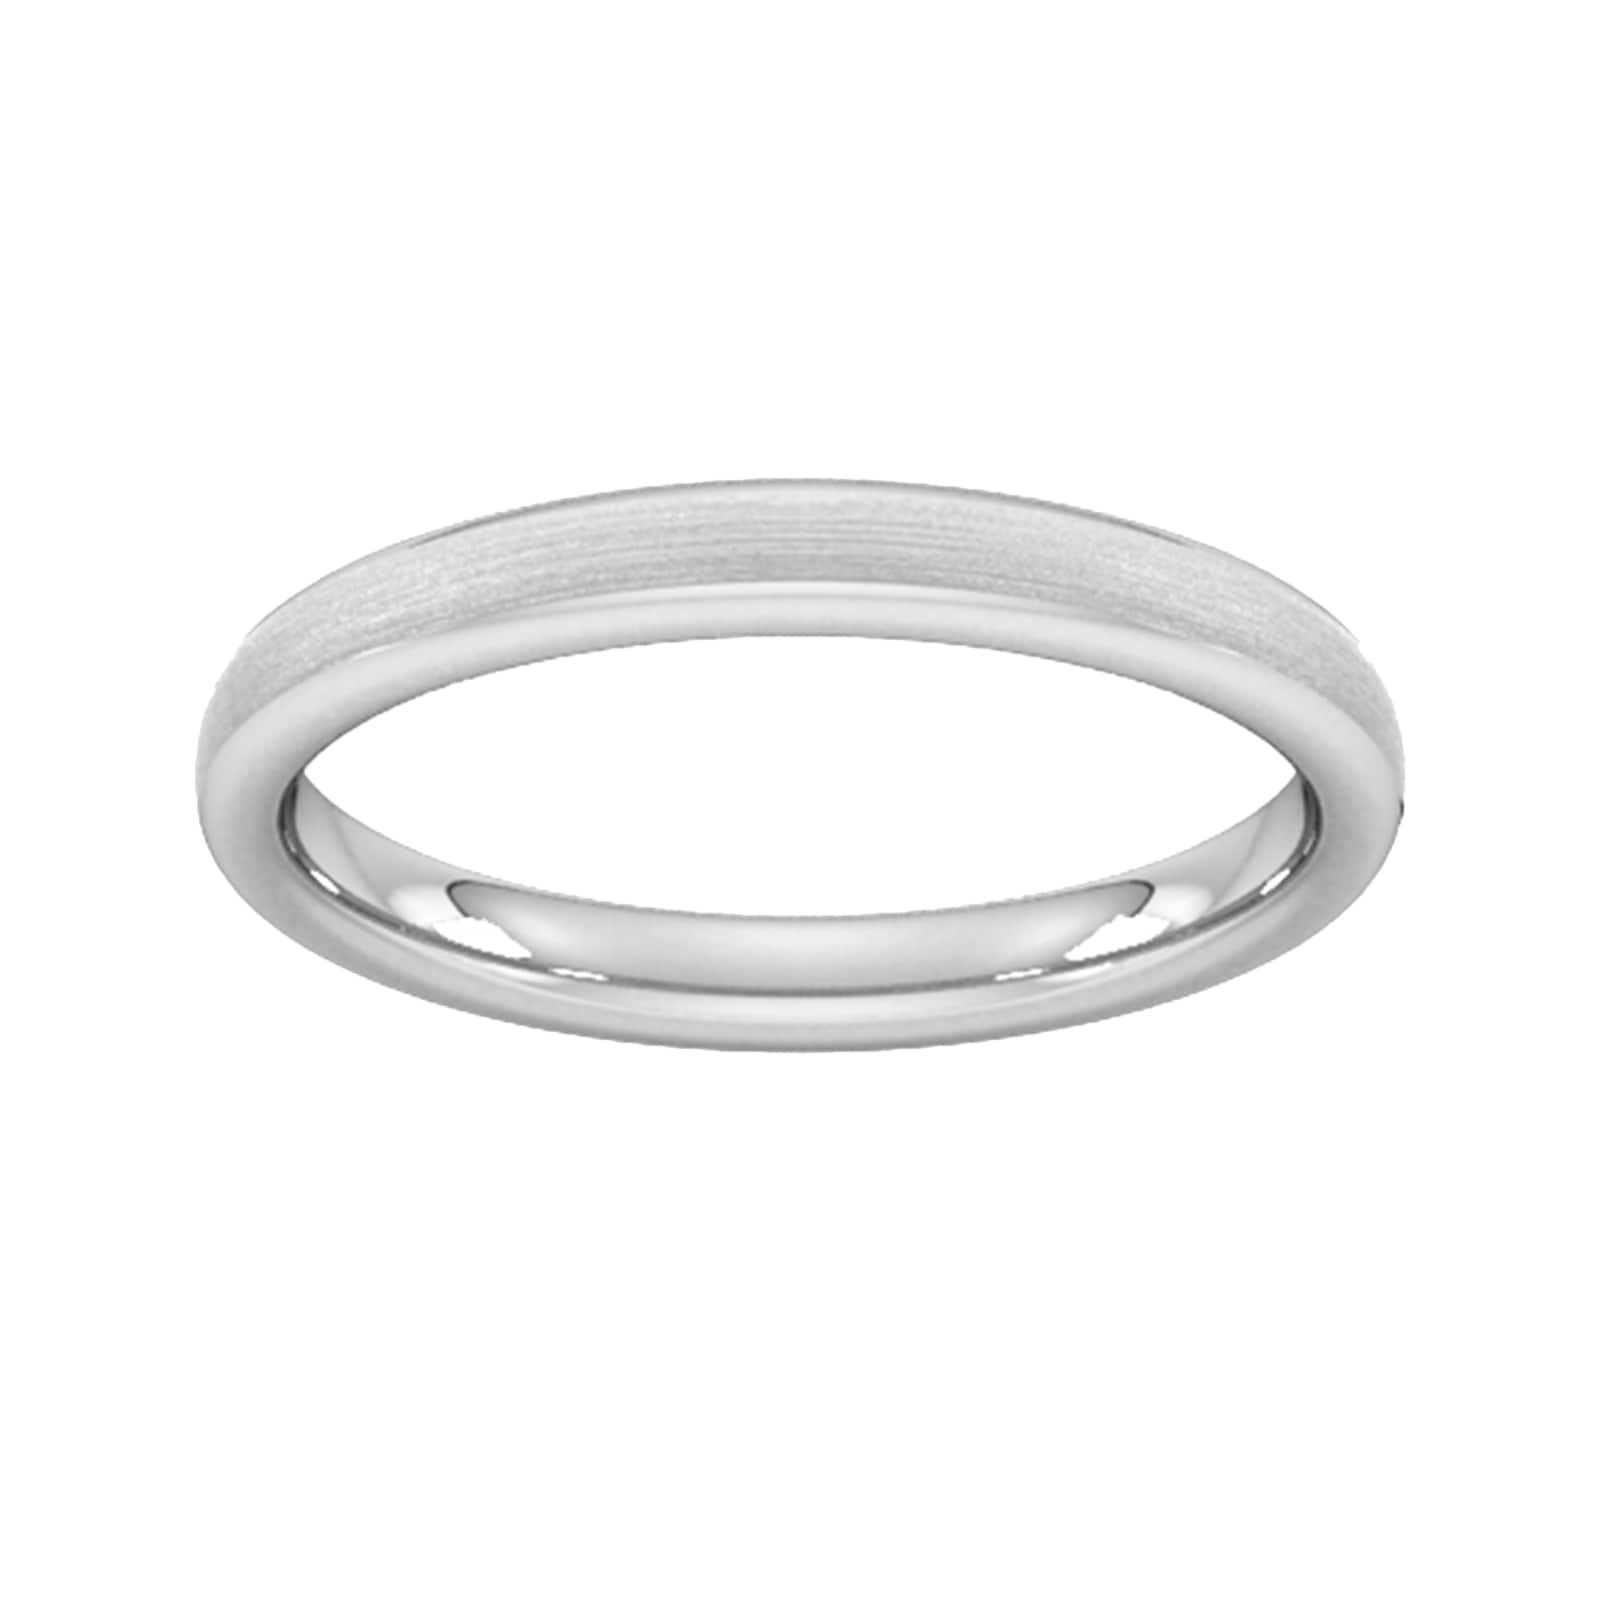 2.5mm D Shape Heavy Matt Finished Wedding Ring In 9 Carat White Gold - Ring Size J